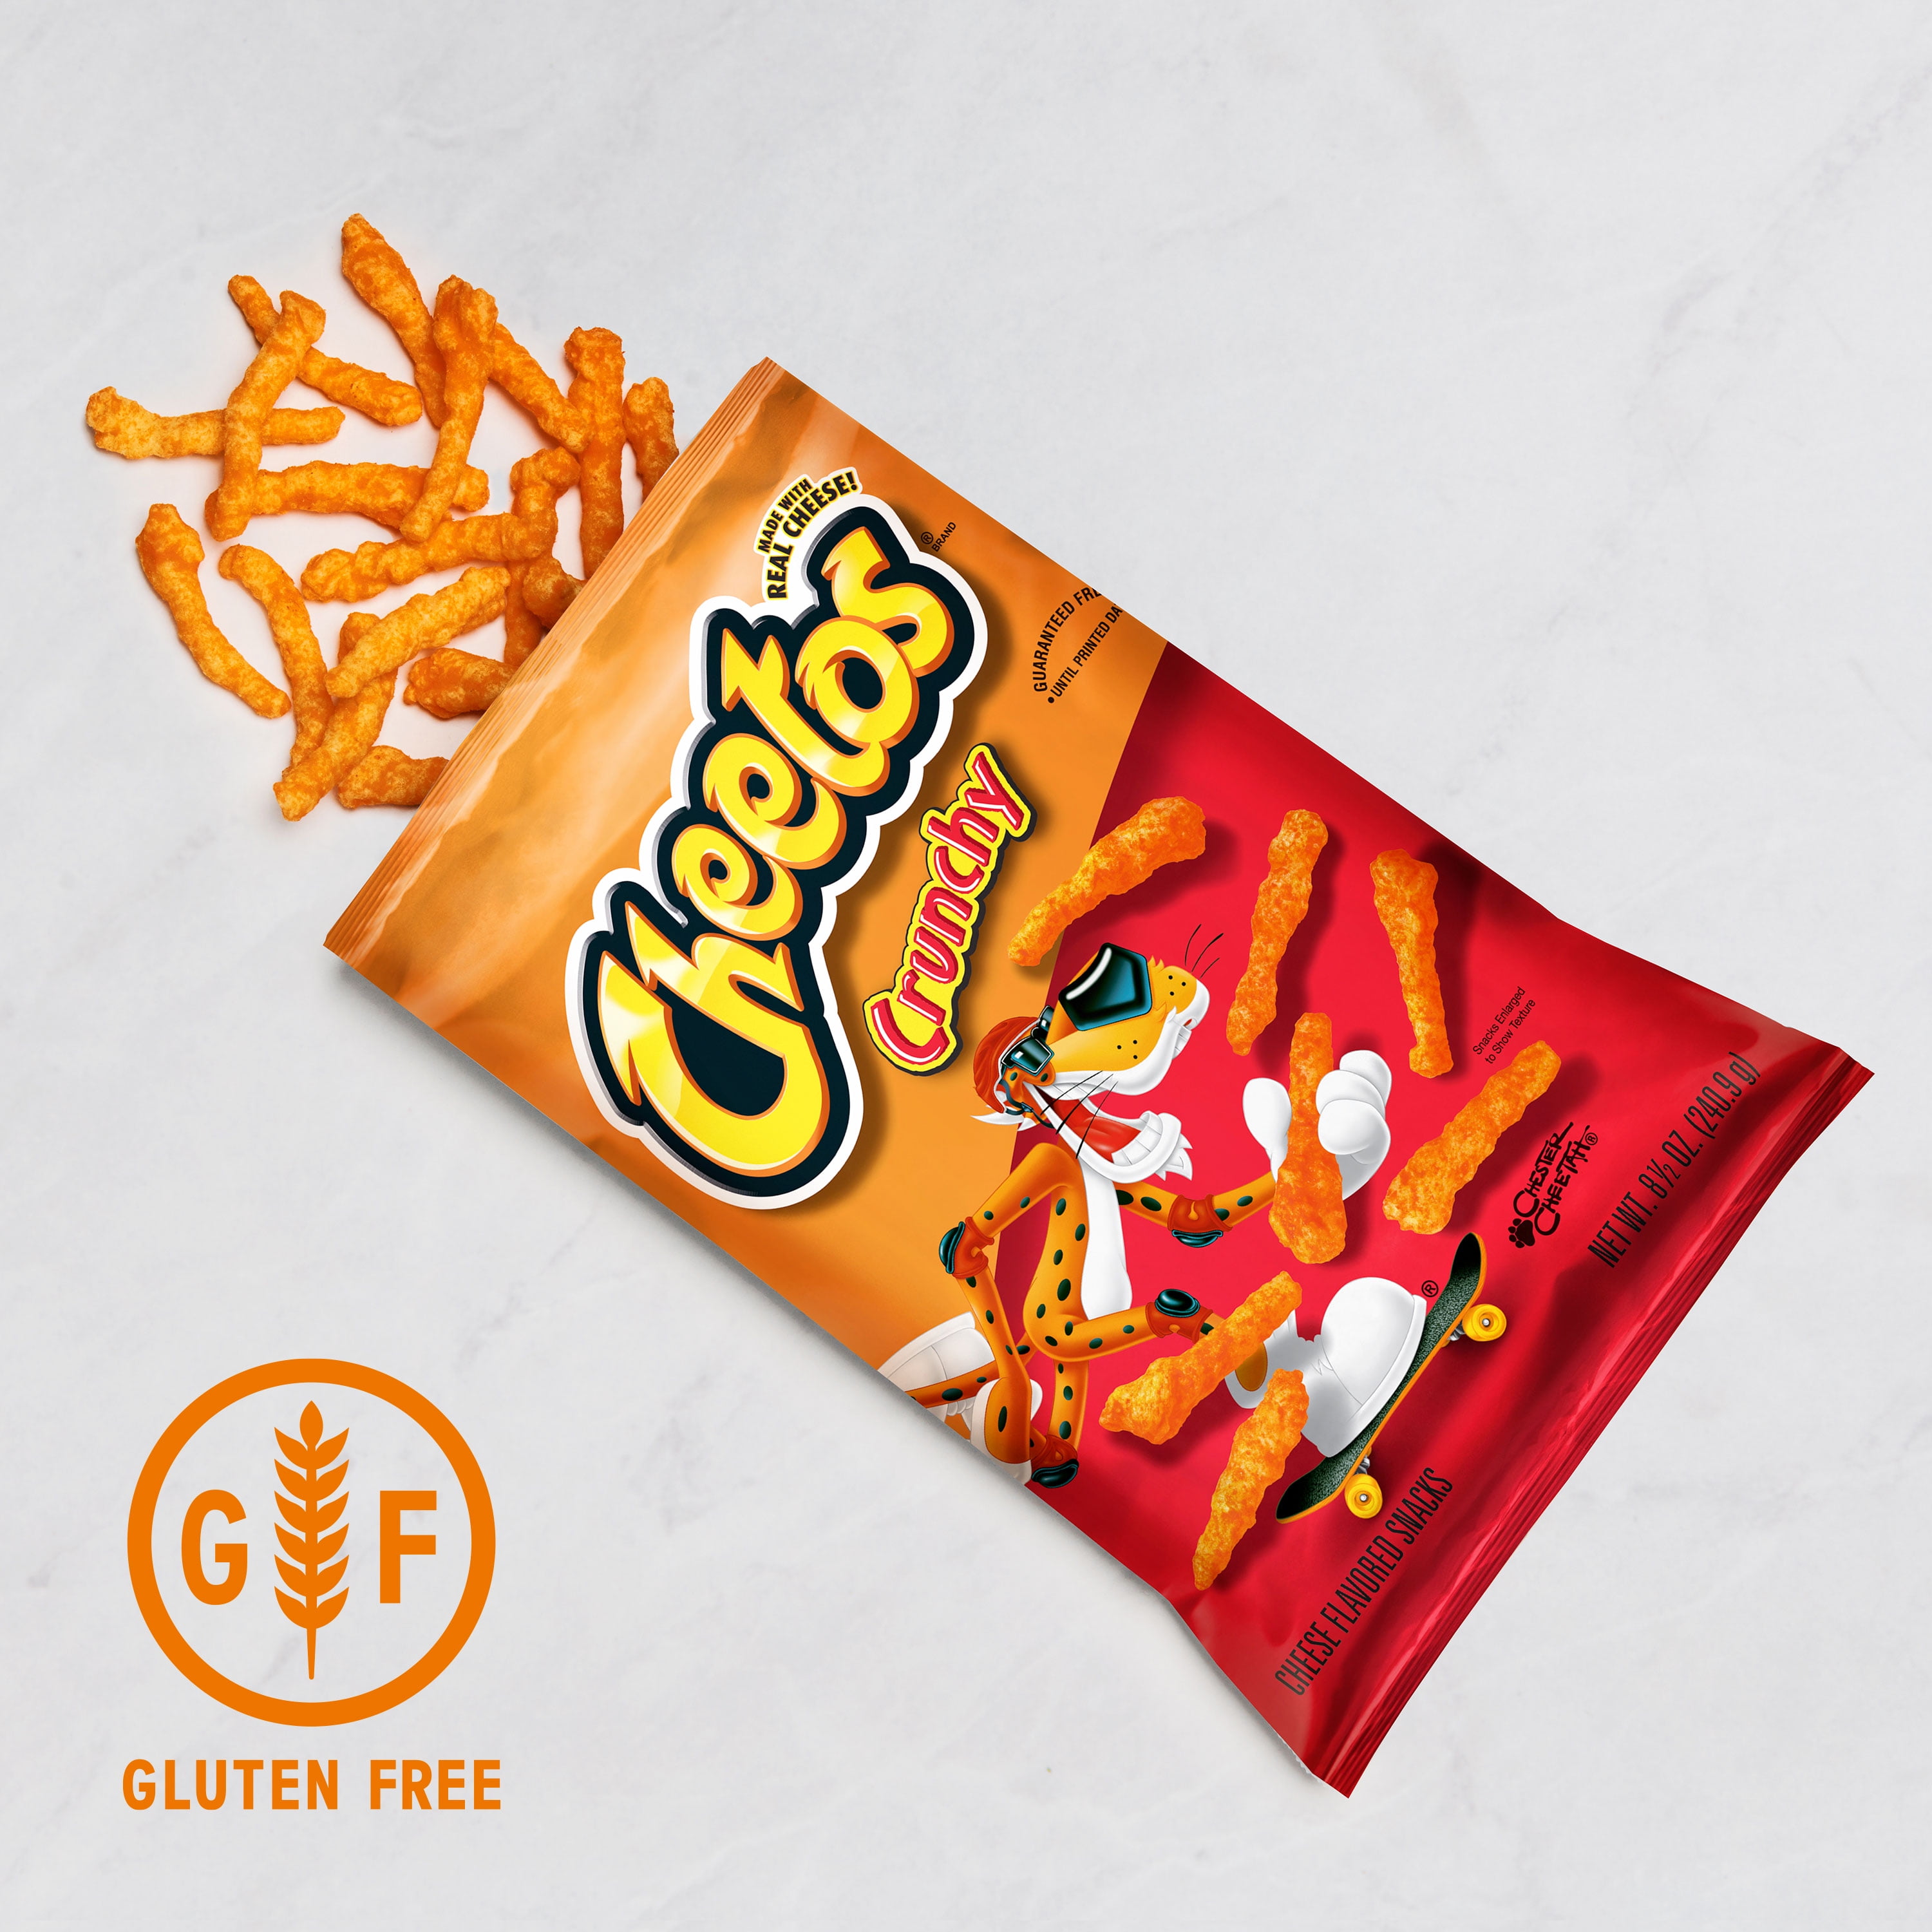 Cheetos Crunchy Flamin' Hot Cheese Flavored Snacks, 3.25 oz - Kroger